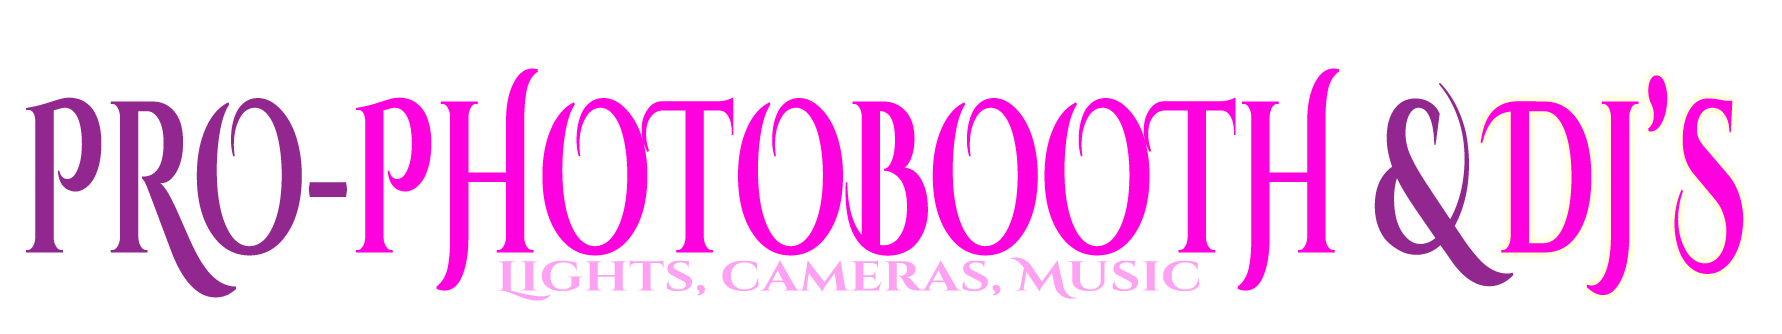 Pro-Photobooth DJ's Logo